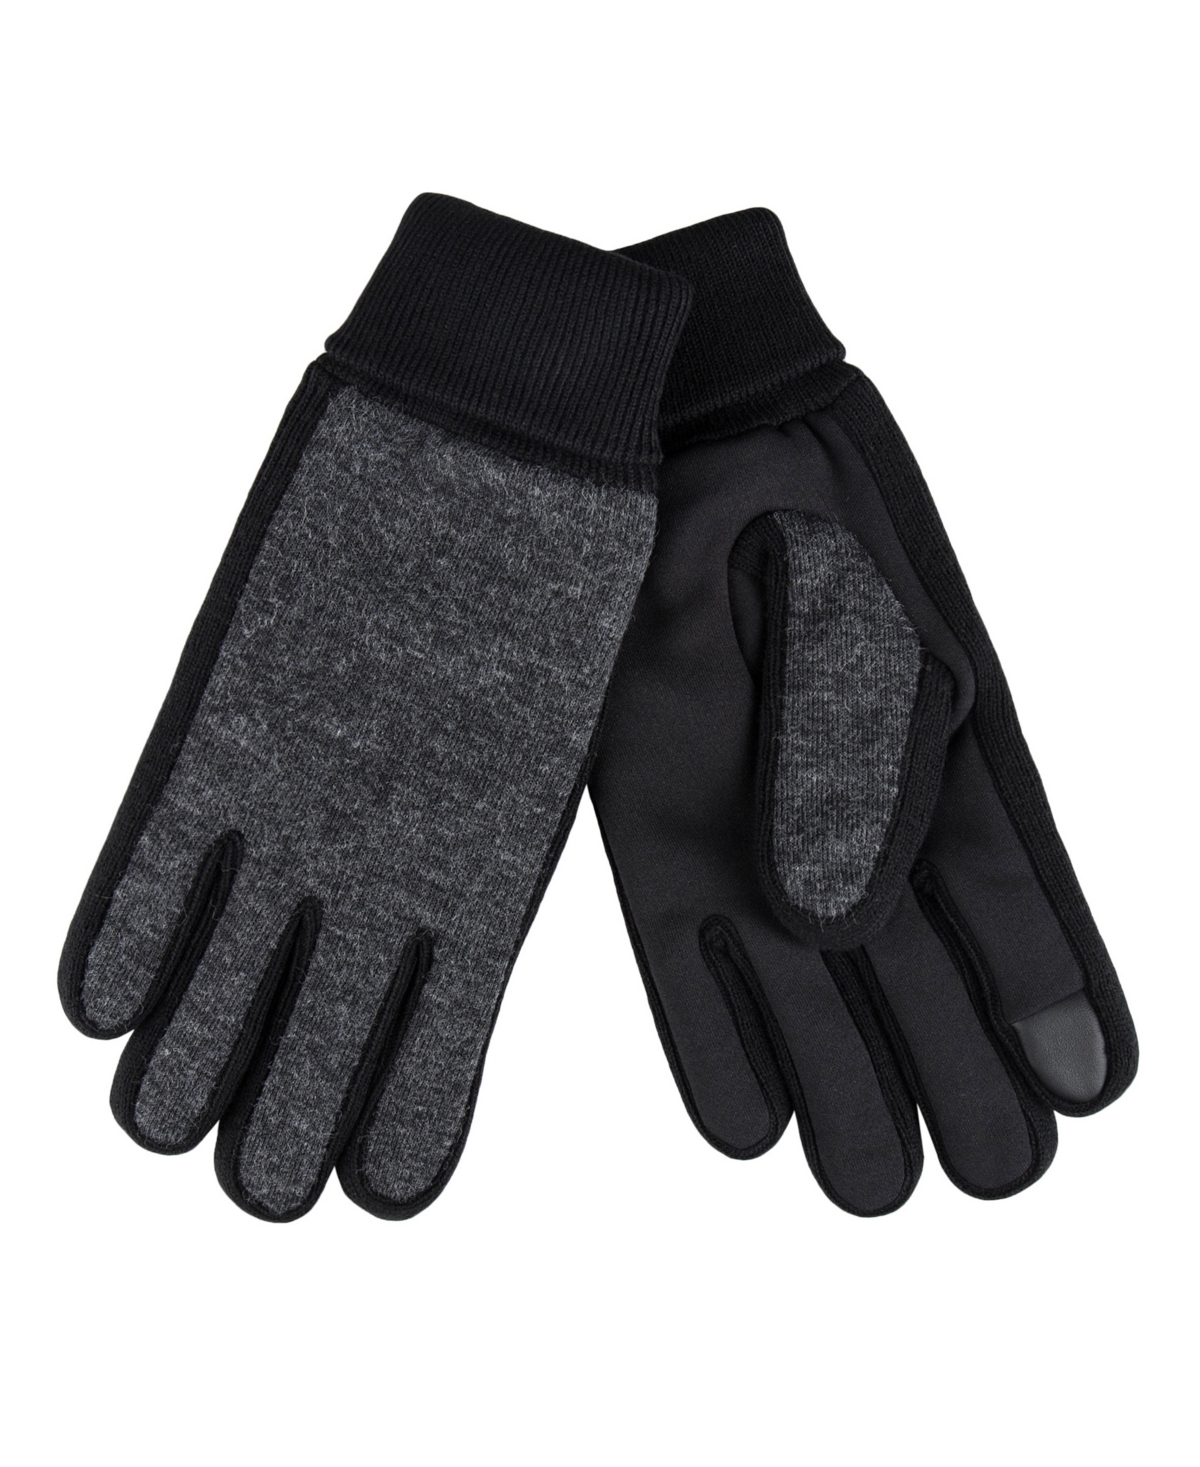 Men's Touchscreen Stretch Knit Tech Palm Gloves - Charcoal